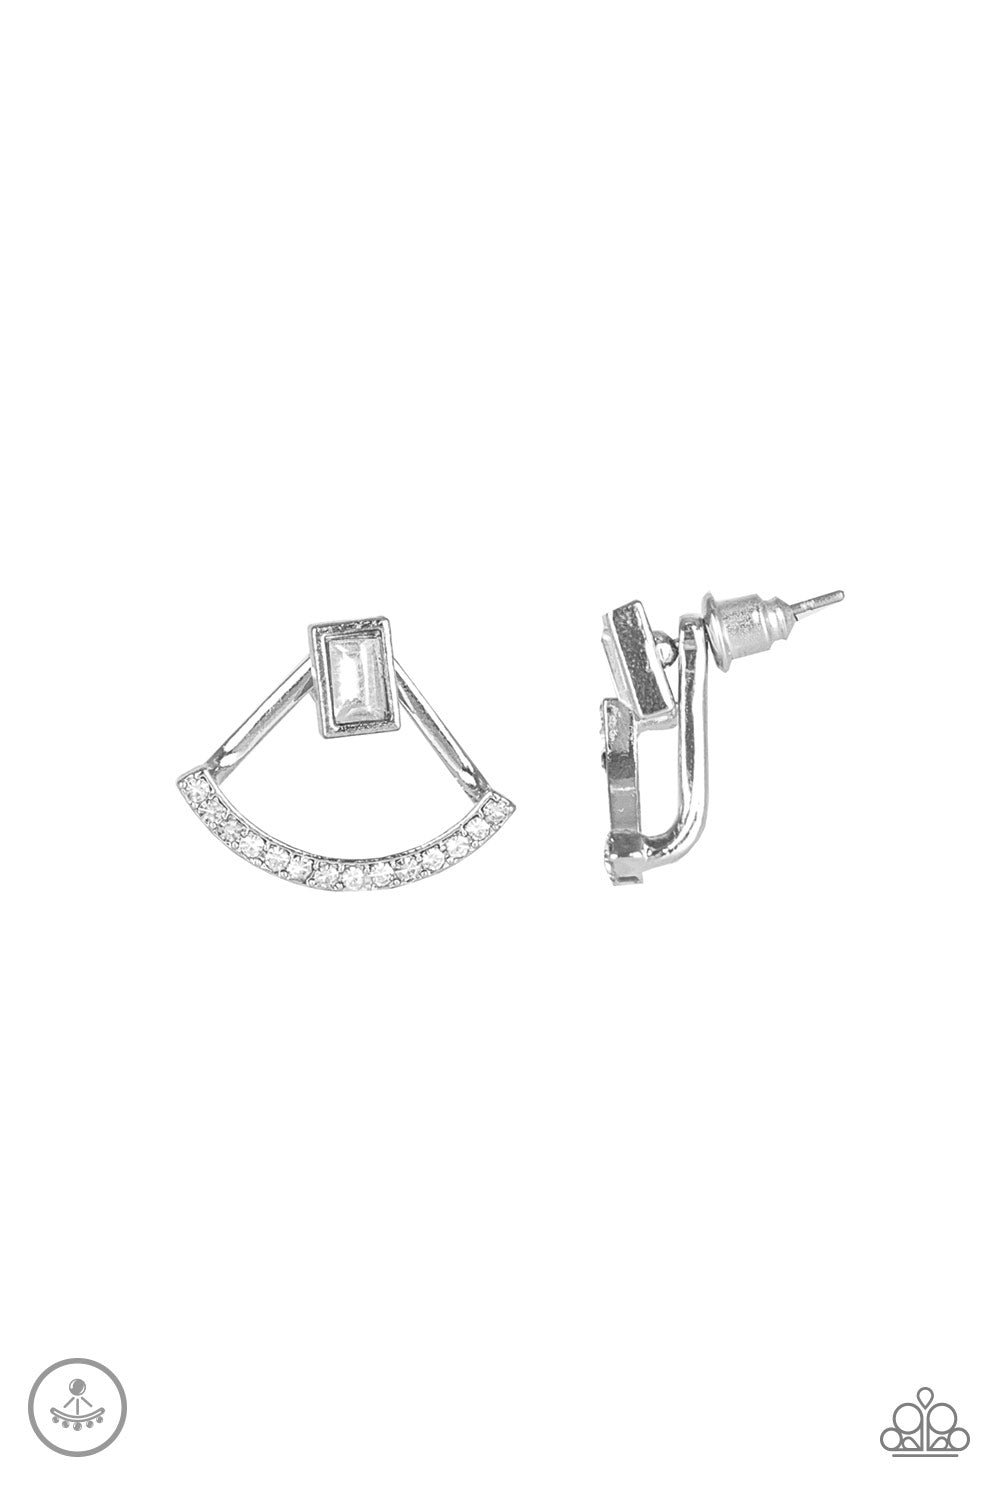 Delicate Arches - White Rhinestone Earrings